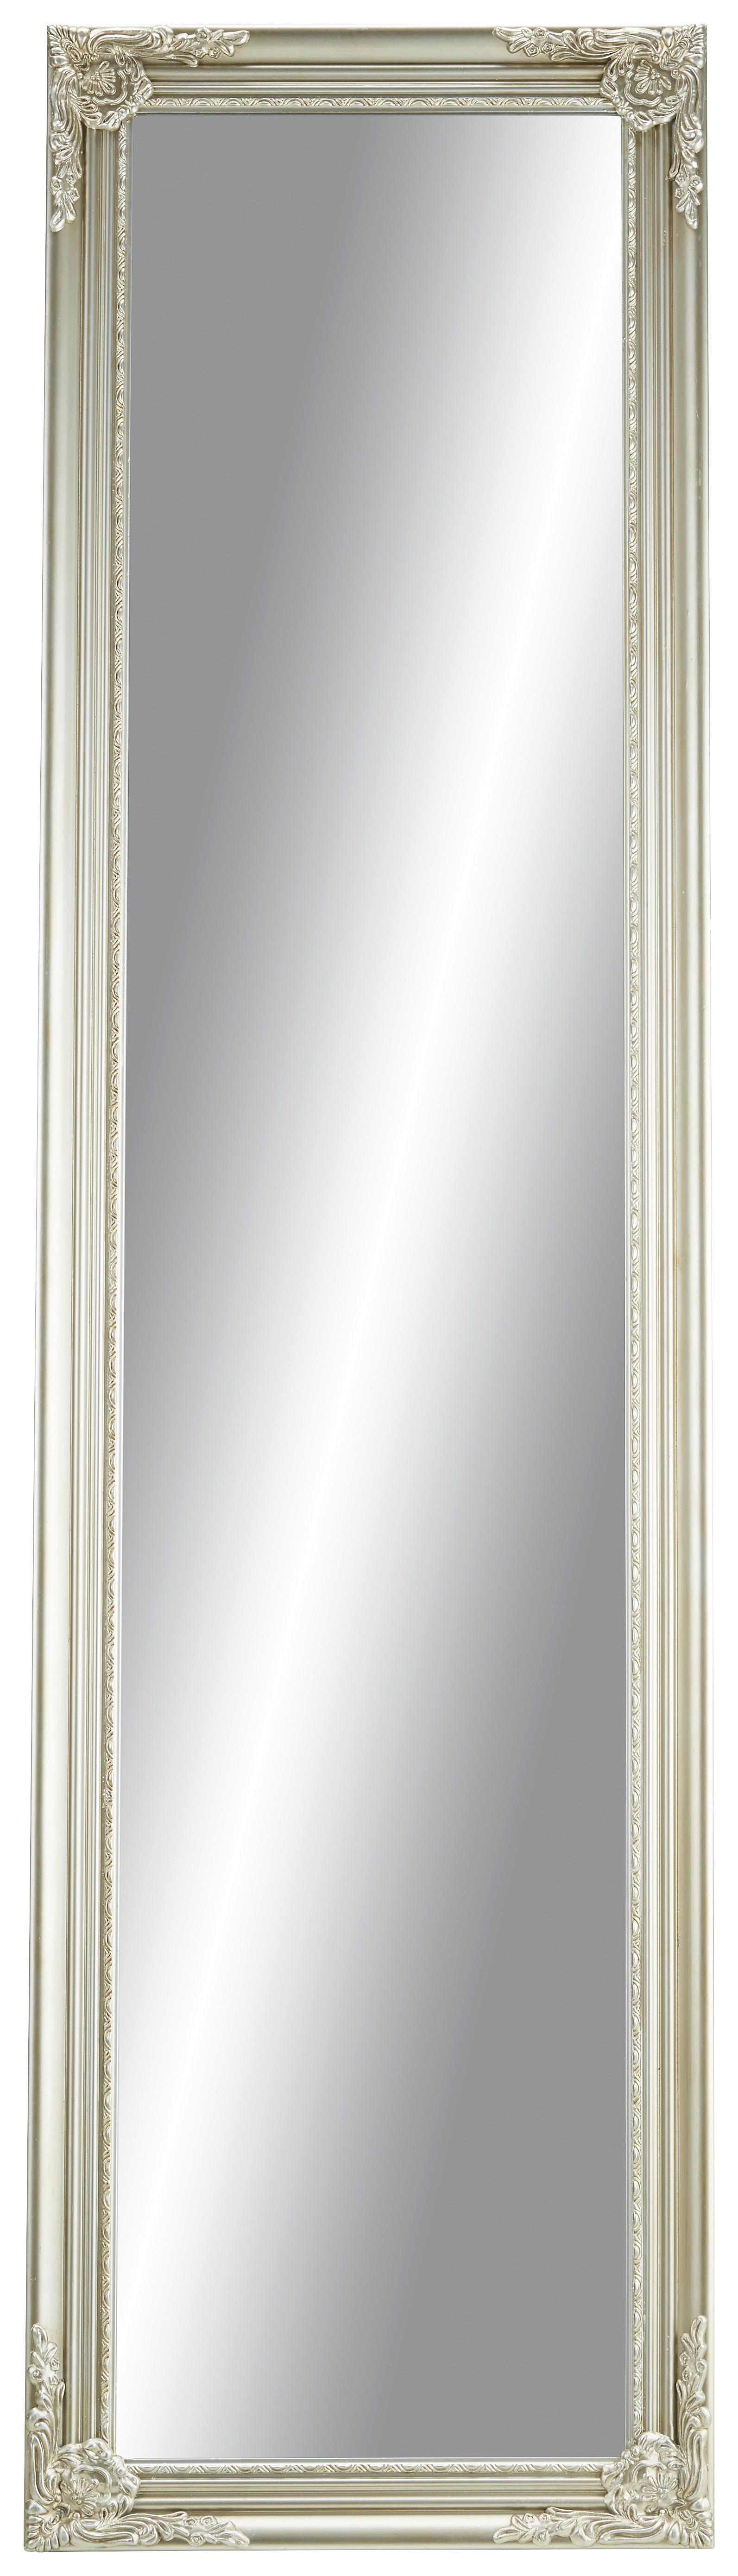 Samostojeće Ogledalo Barock - srebrne boje, Romantik / Landhaus, staklo/drvo (45/170/5cm) - Modern Living